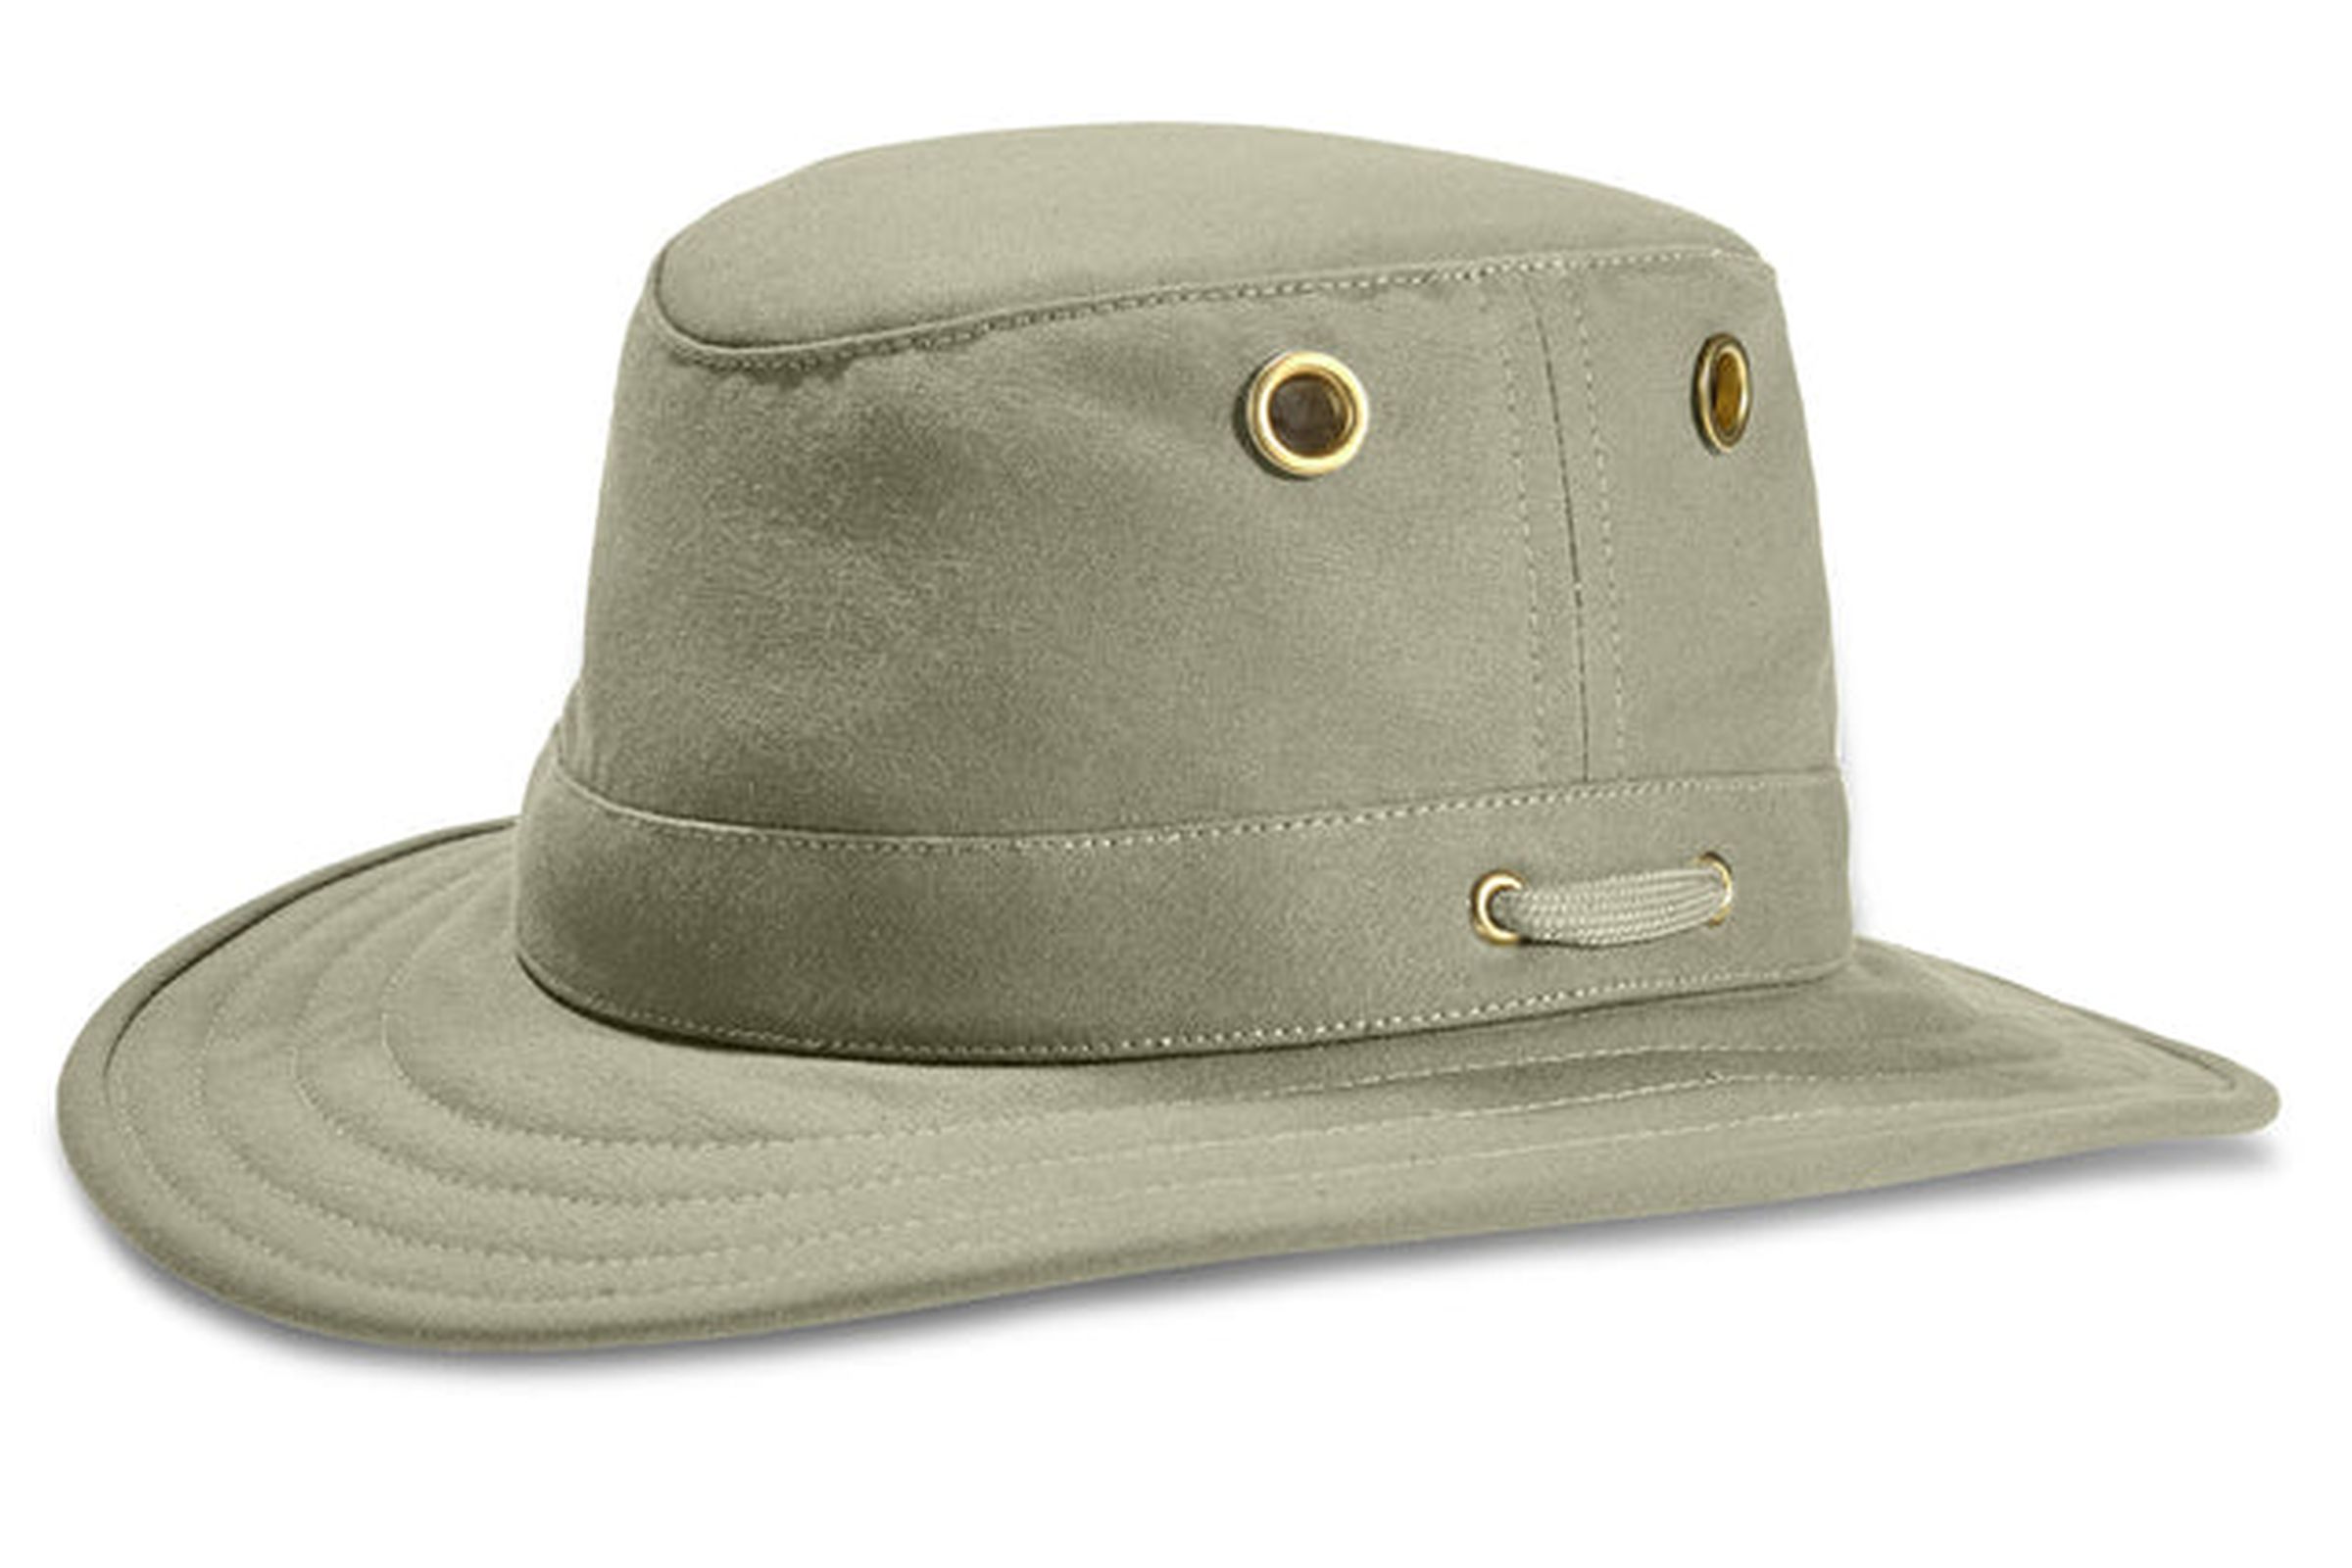 Tan cloth hat with wide brim